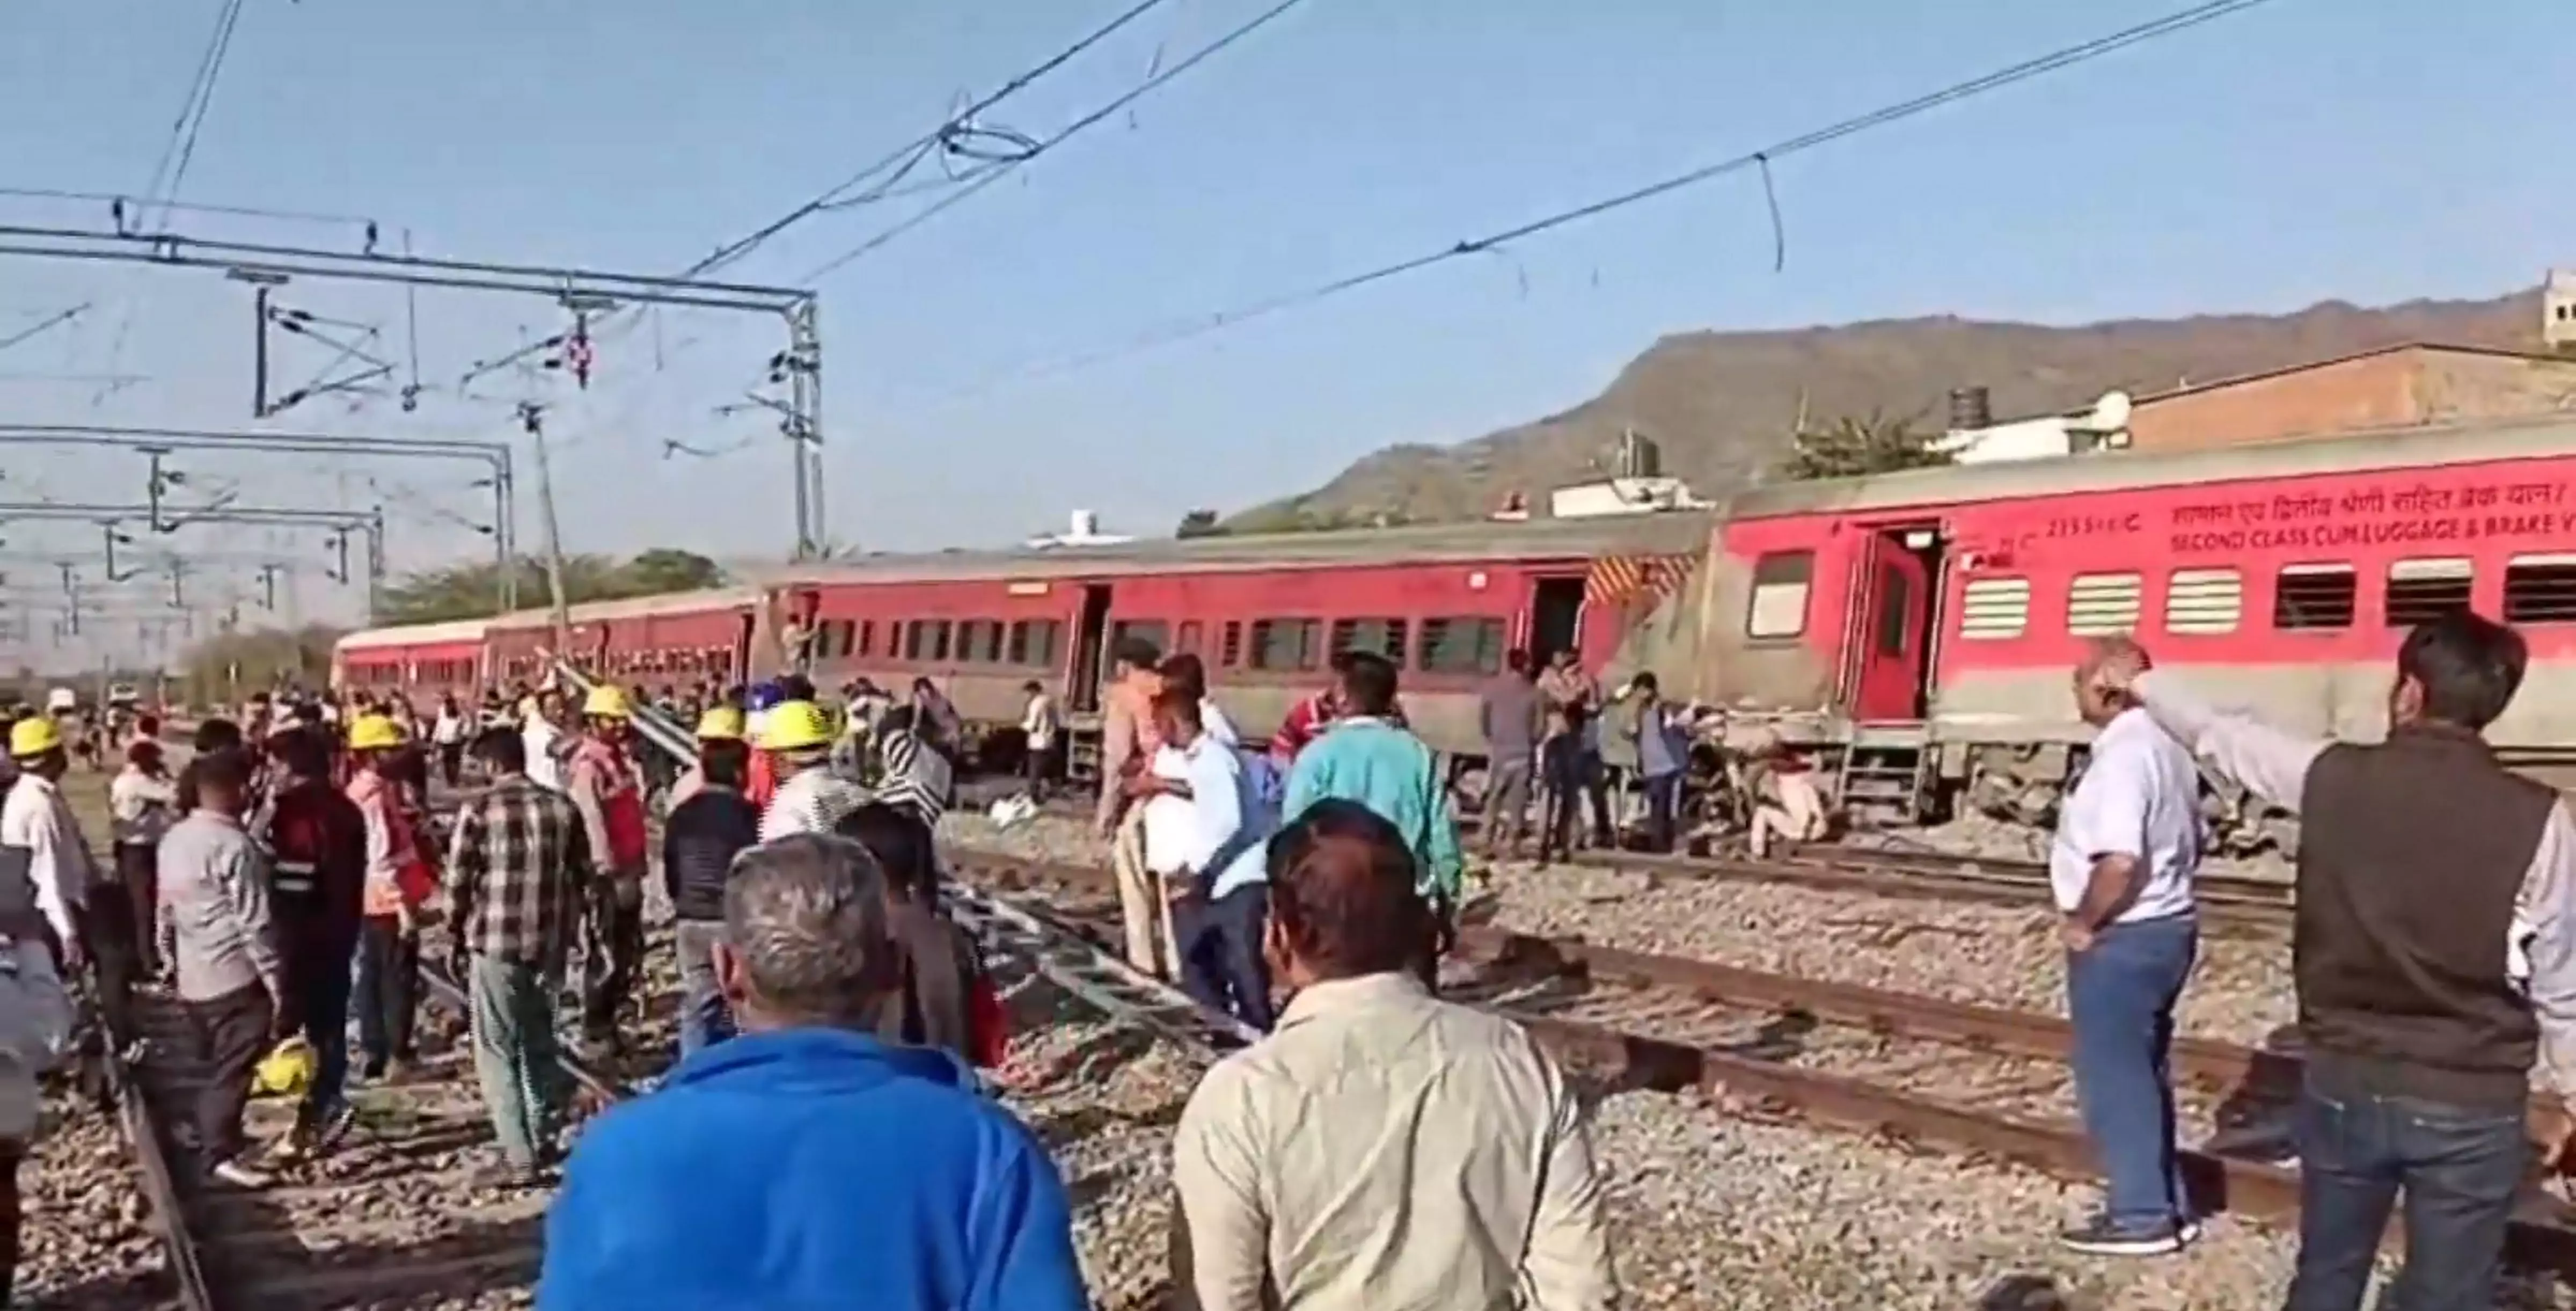 Ajmer train derailment: Initial probe says driver overshot signal